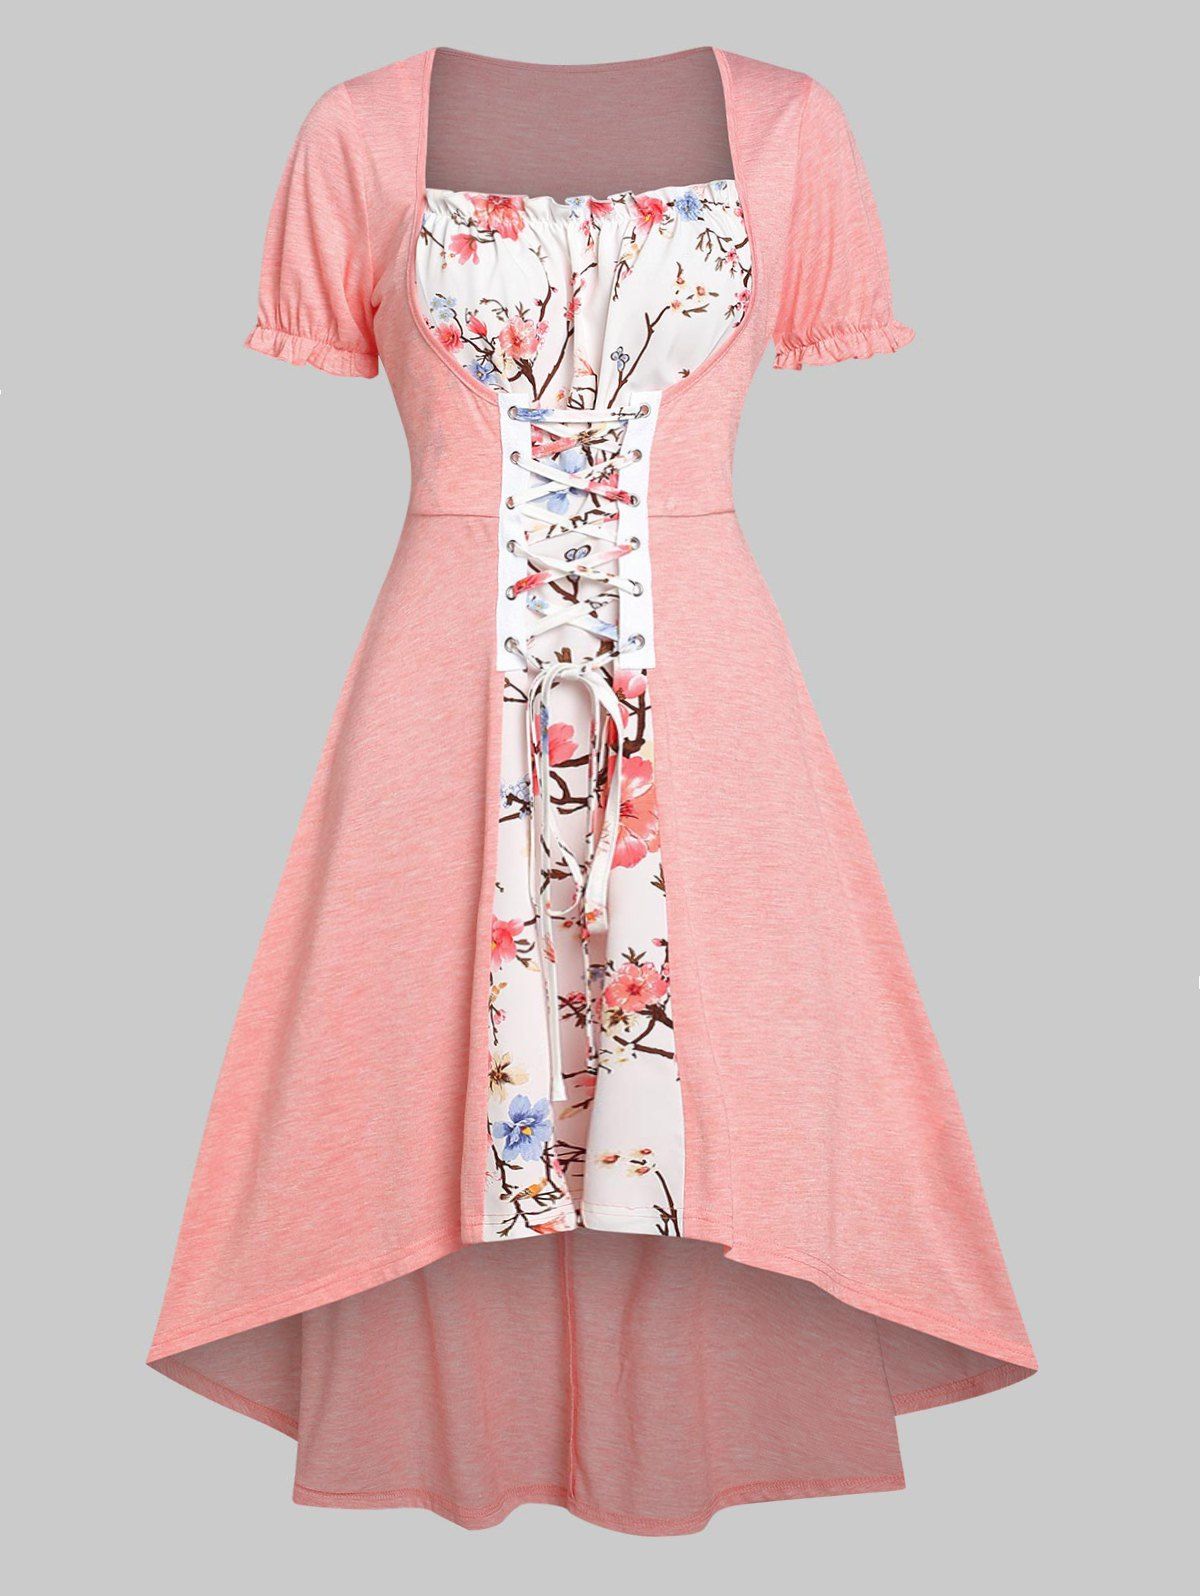 Floral Print Cottagecore Faux Twinset Dress Lace Up High Low Dress Ruffles Short Sleeve Midi Dress - LIGHT PINK M